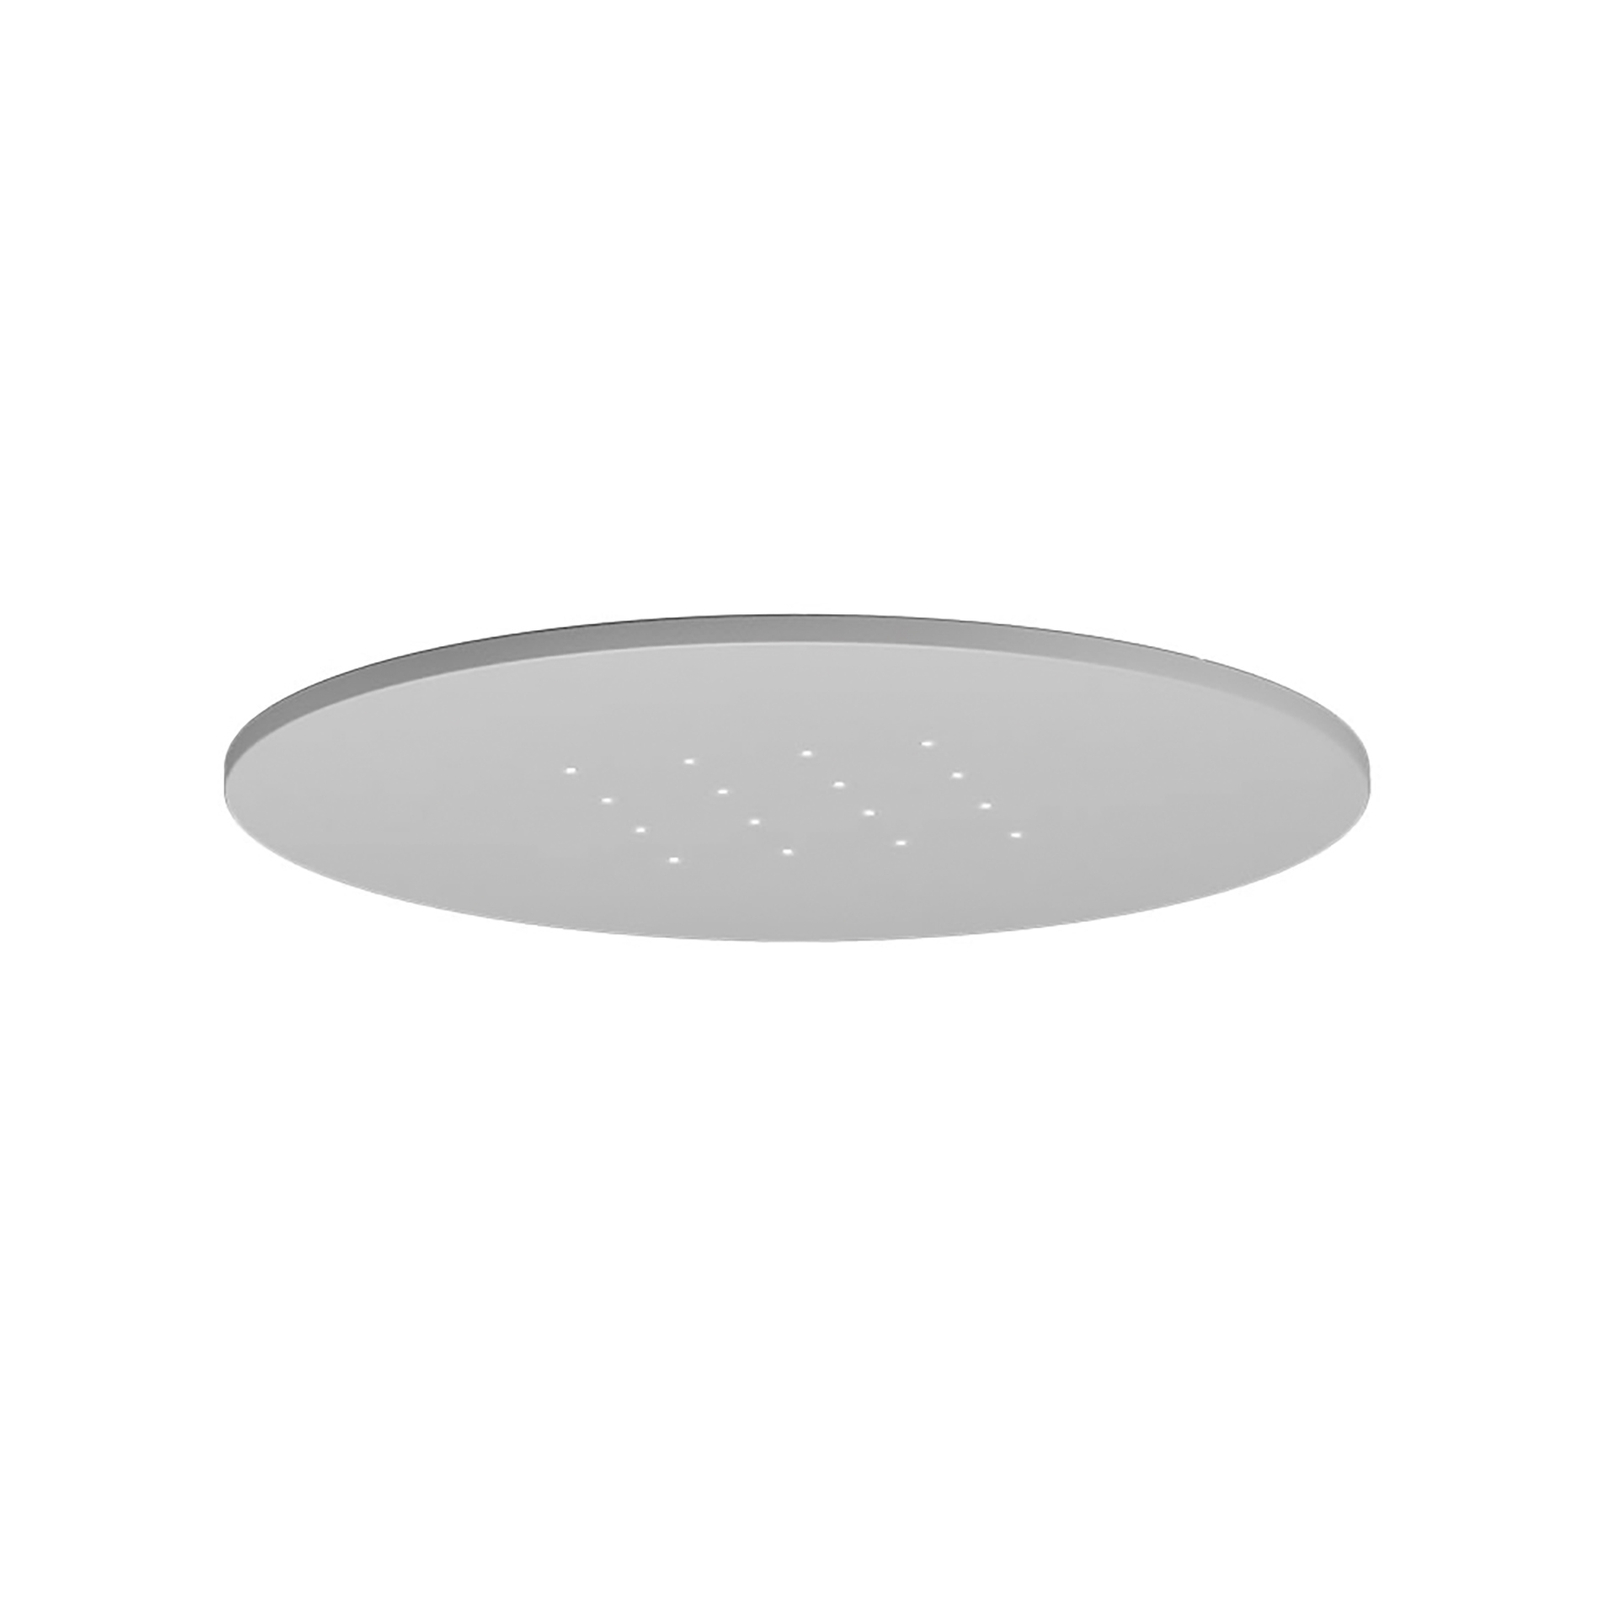 LEDWORKS Sono-LED Round 16 sufit 930 38° biała